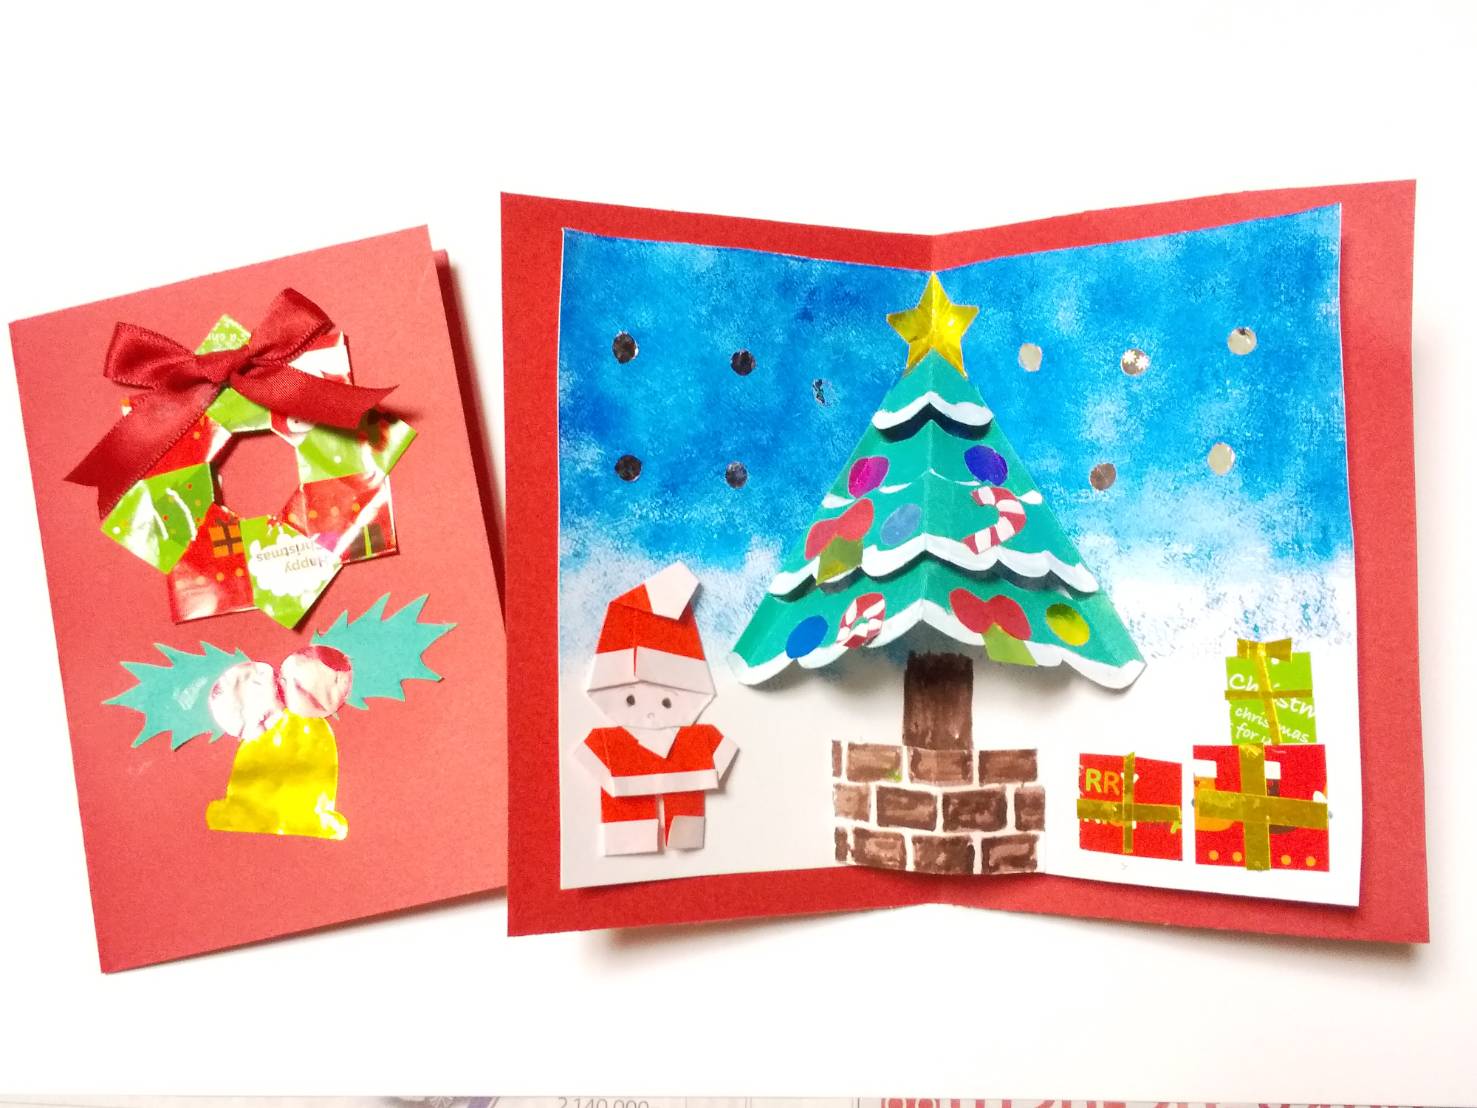 Kaomiclub栗東教室でクリスマスイベント クリスマスツリーやカードの絵を作ろう 12月15日開催 滋賀のママがイベント 育児 遊び 学びを発信 シガマンマ ピースマム